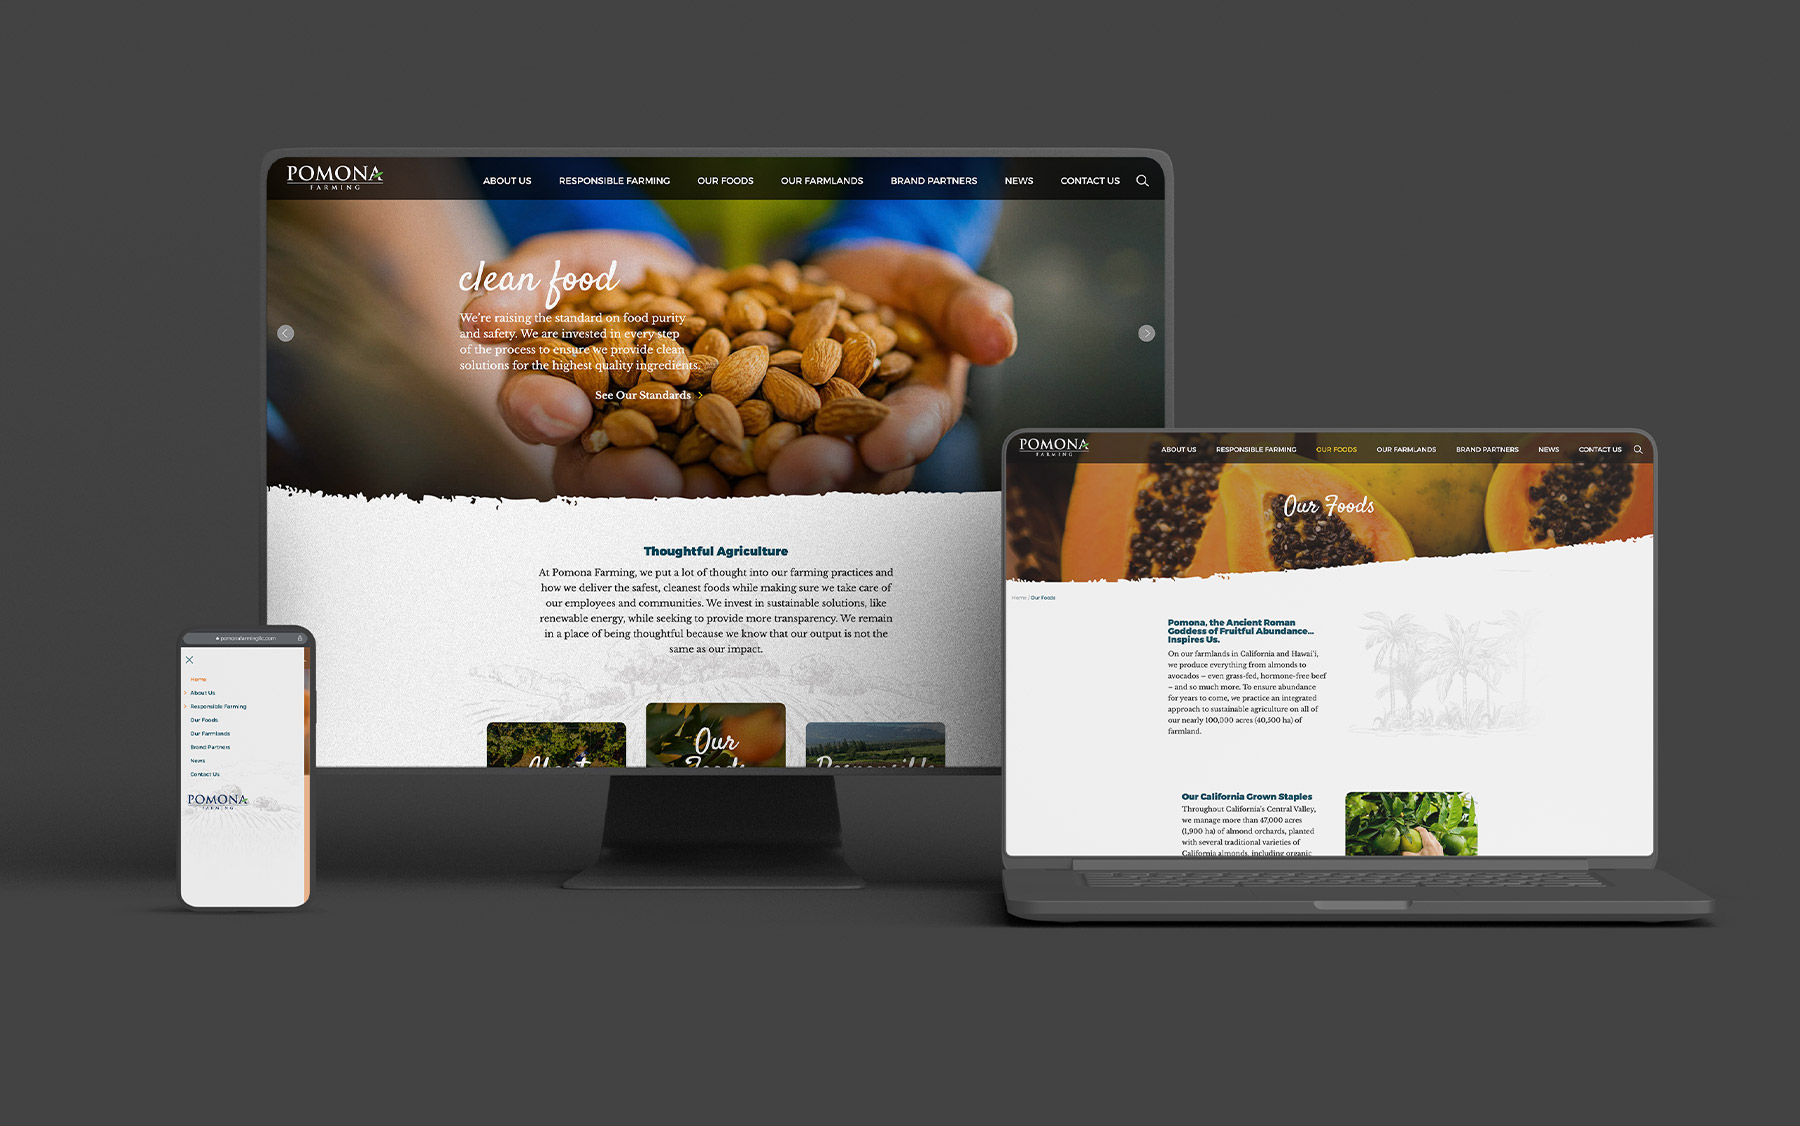 Pomona Farming's website designed by Kinetic